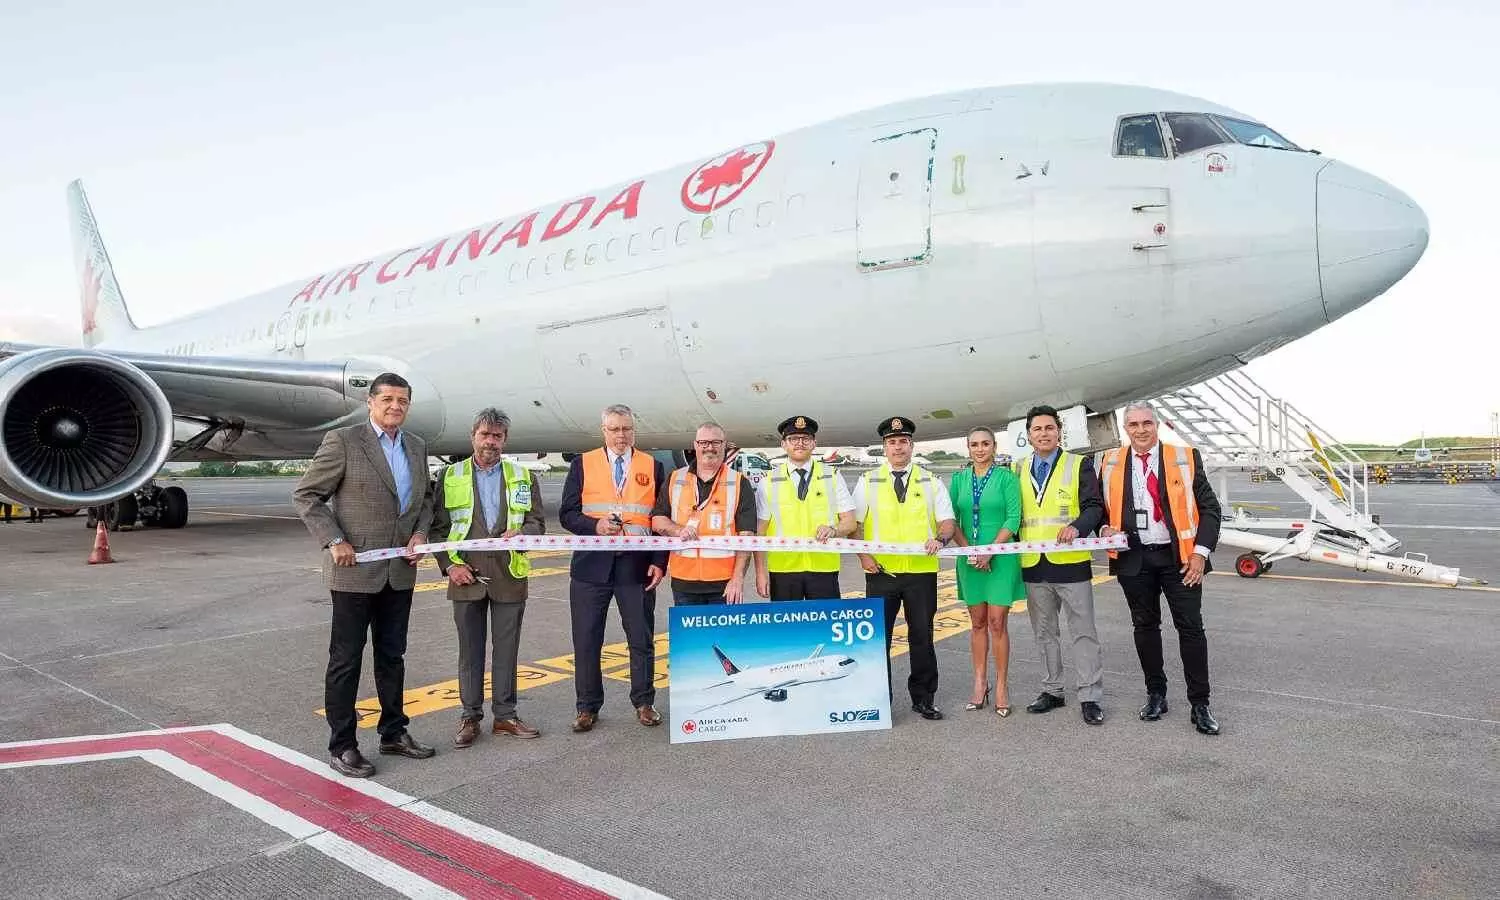 Air Canada Cargo begins service to Costa Rica